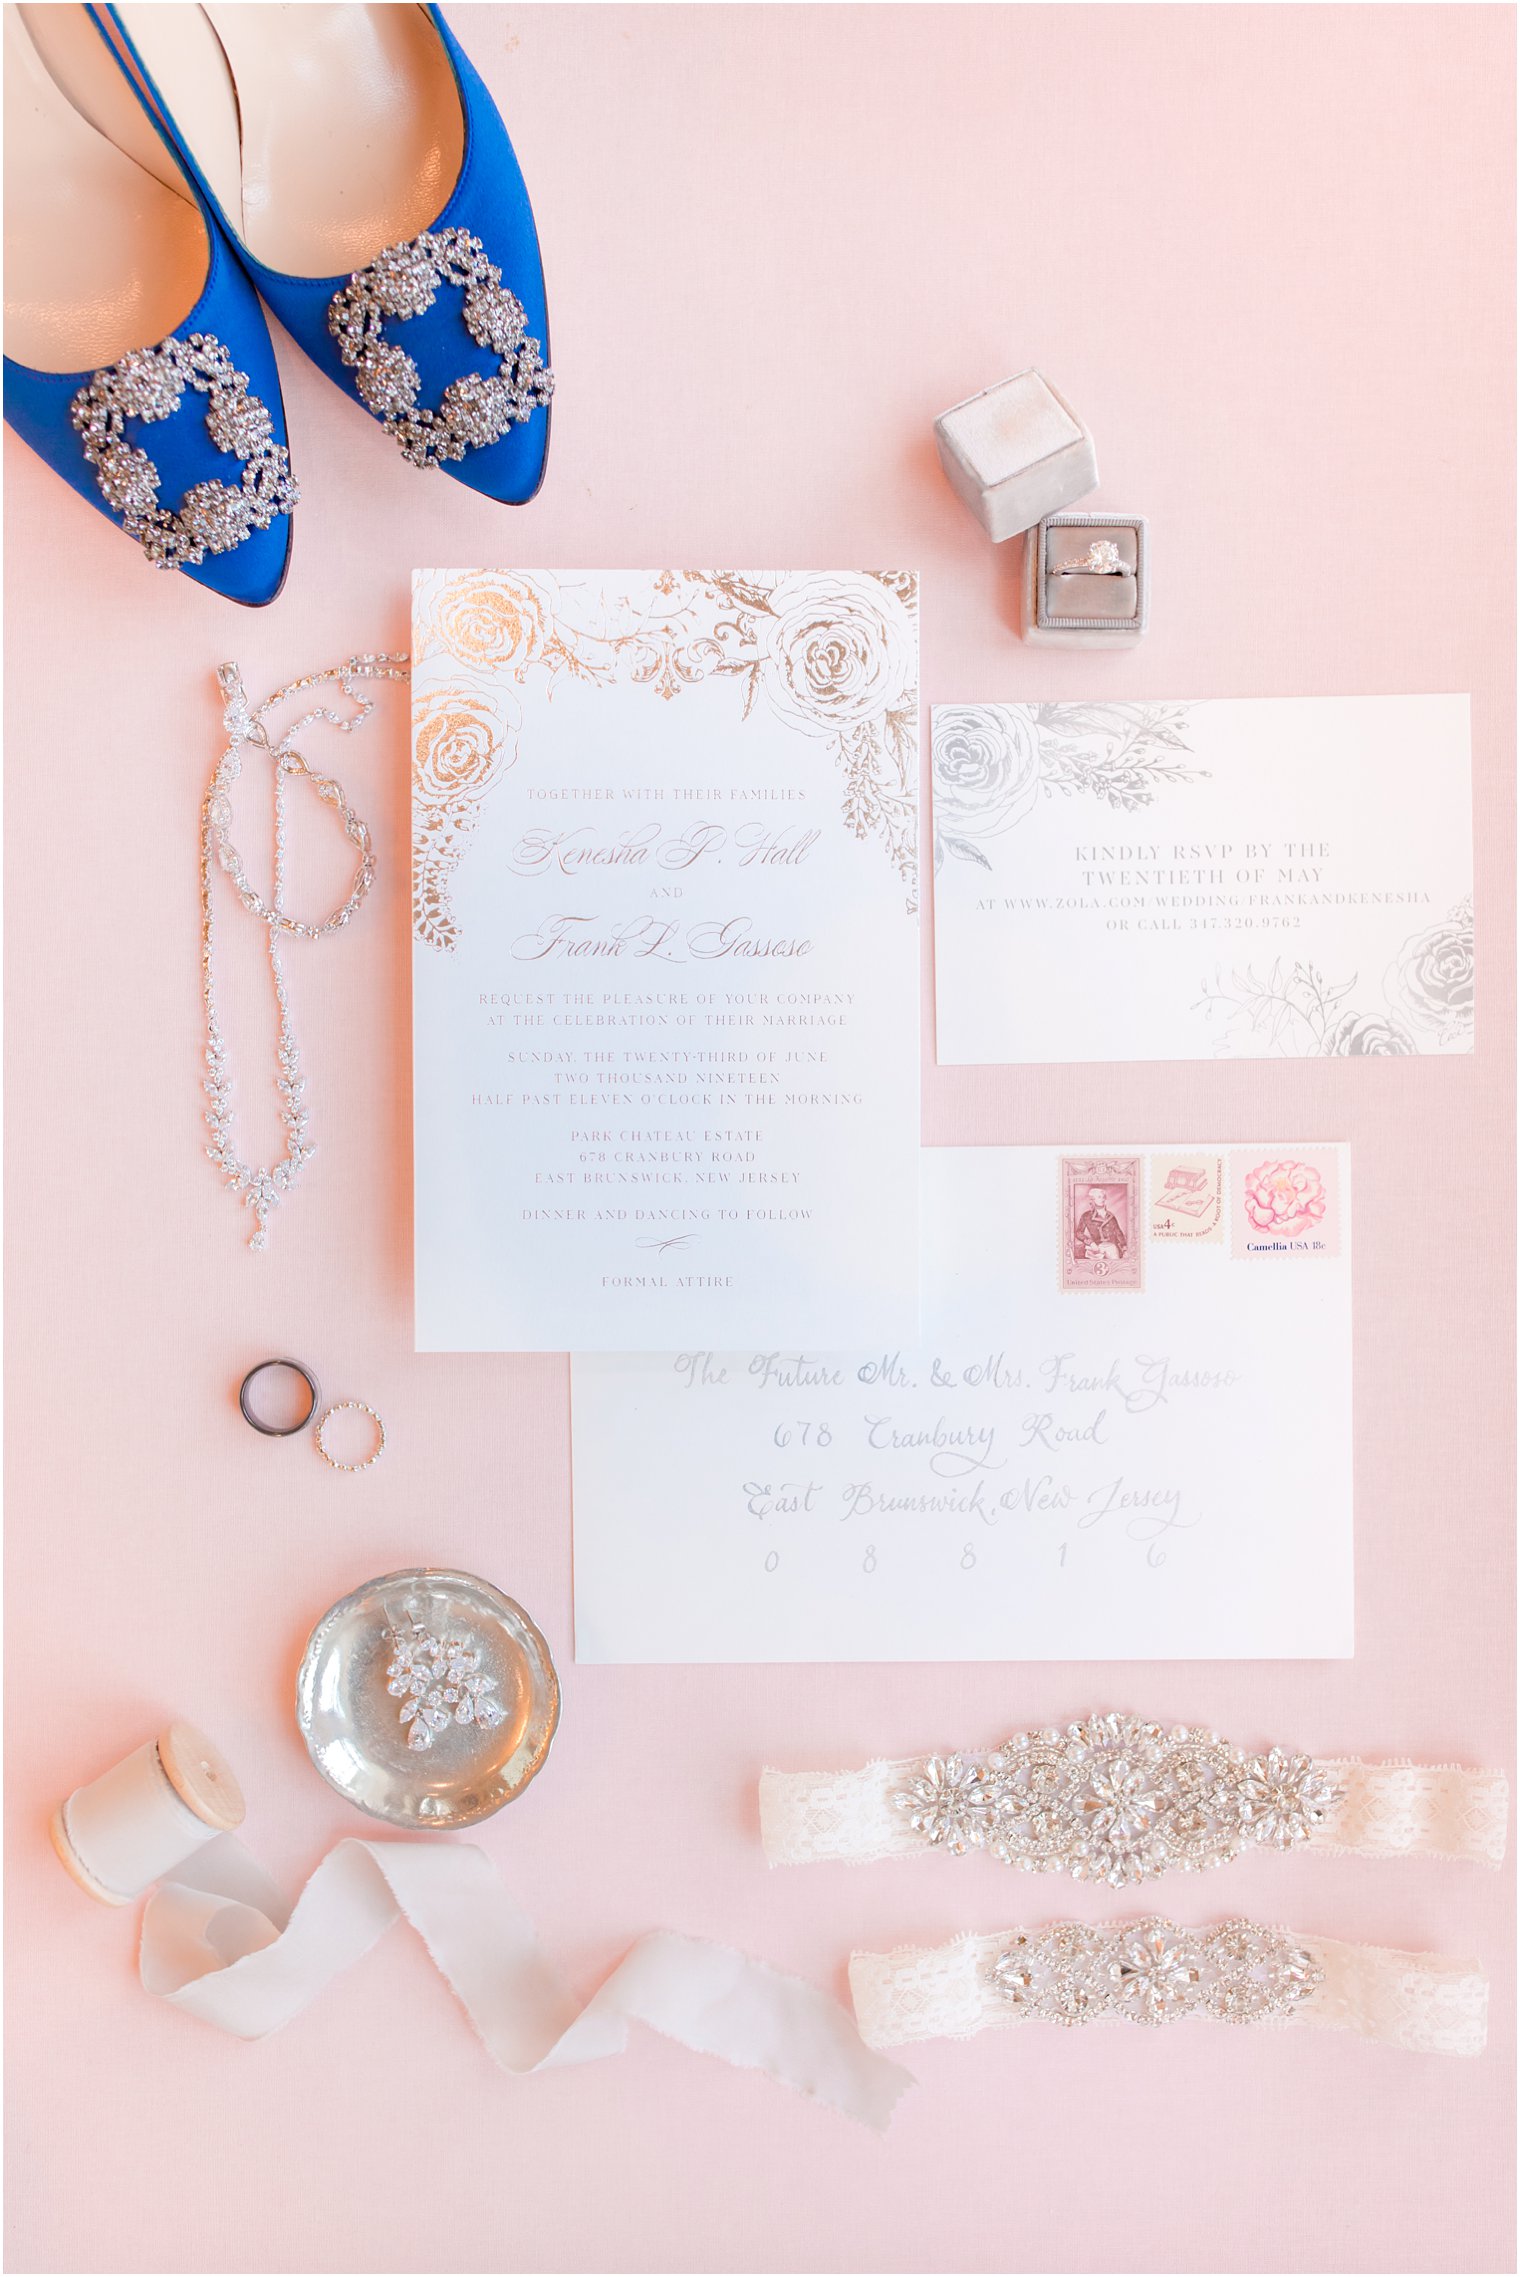 elegant wedding invitation in white and silver